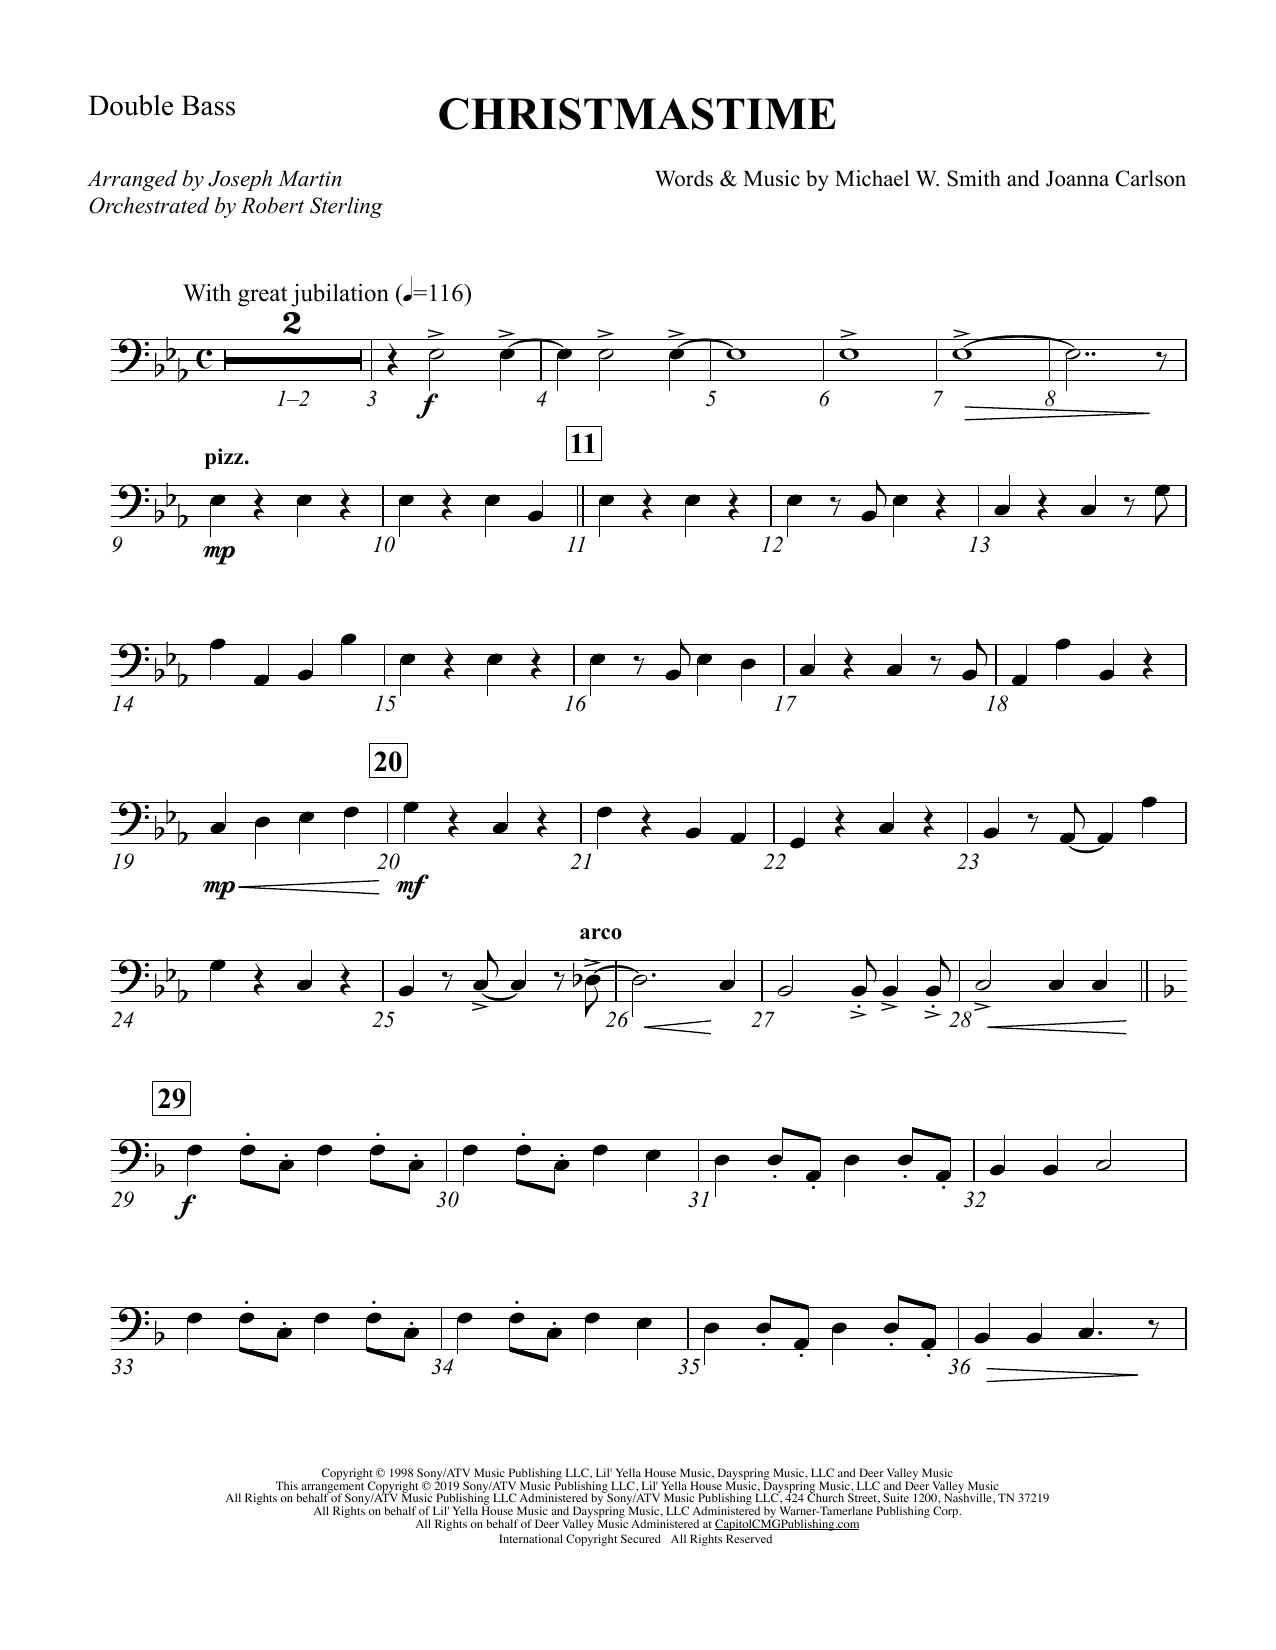 Michael W. Smith & Joanna Carlson Christmastime (arr. Joseph M. Martin) - Double Bass Sheet Music Notes & Chords for Choir Instrumental Pak - Download or Print PDF